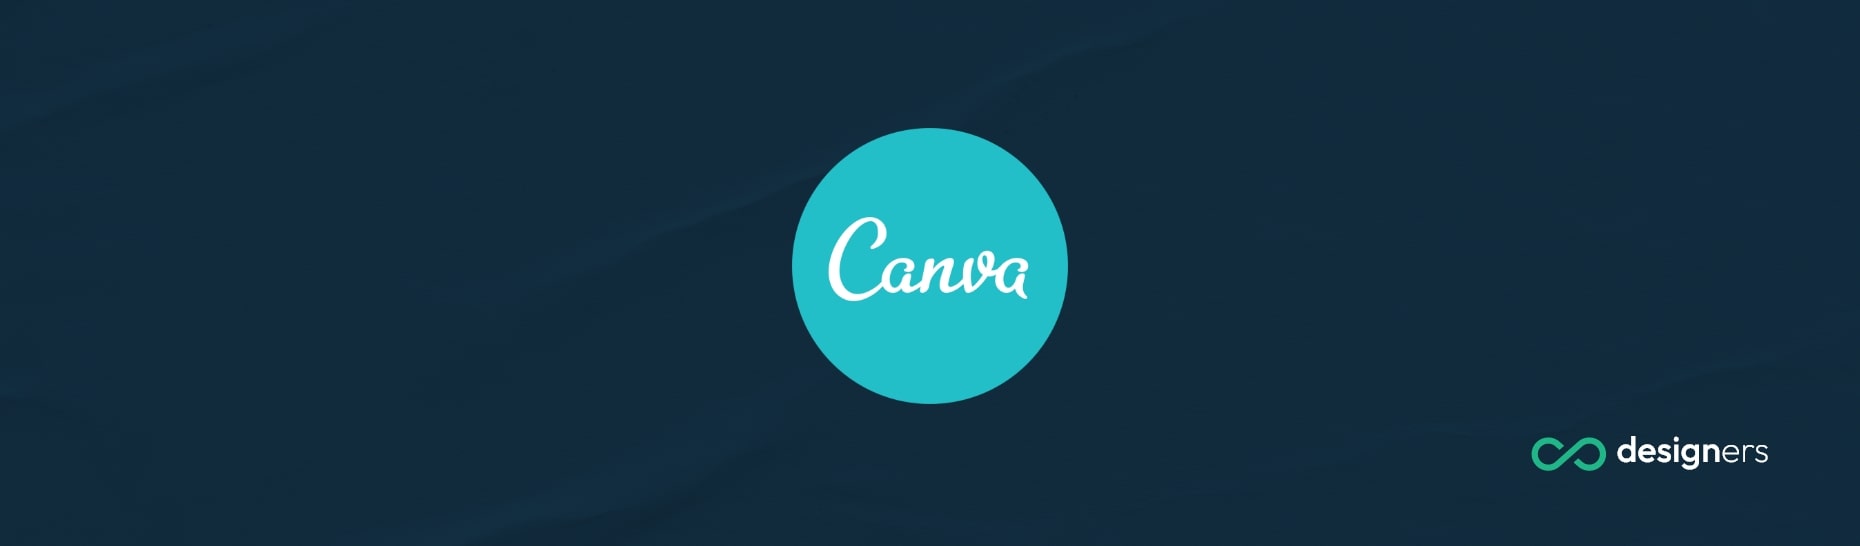 Does Adobe Have Something Like Canva?